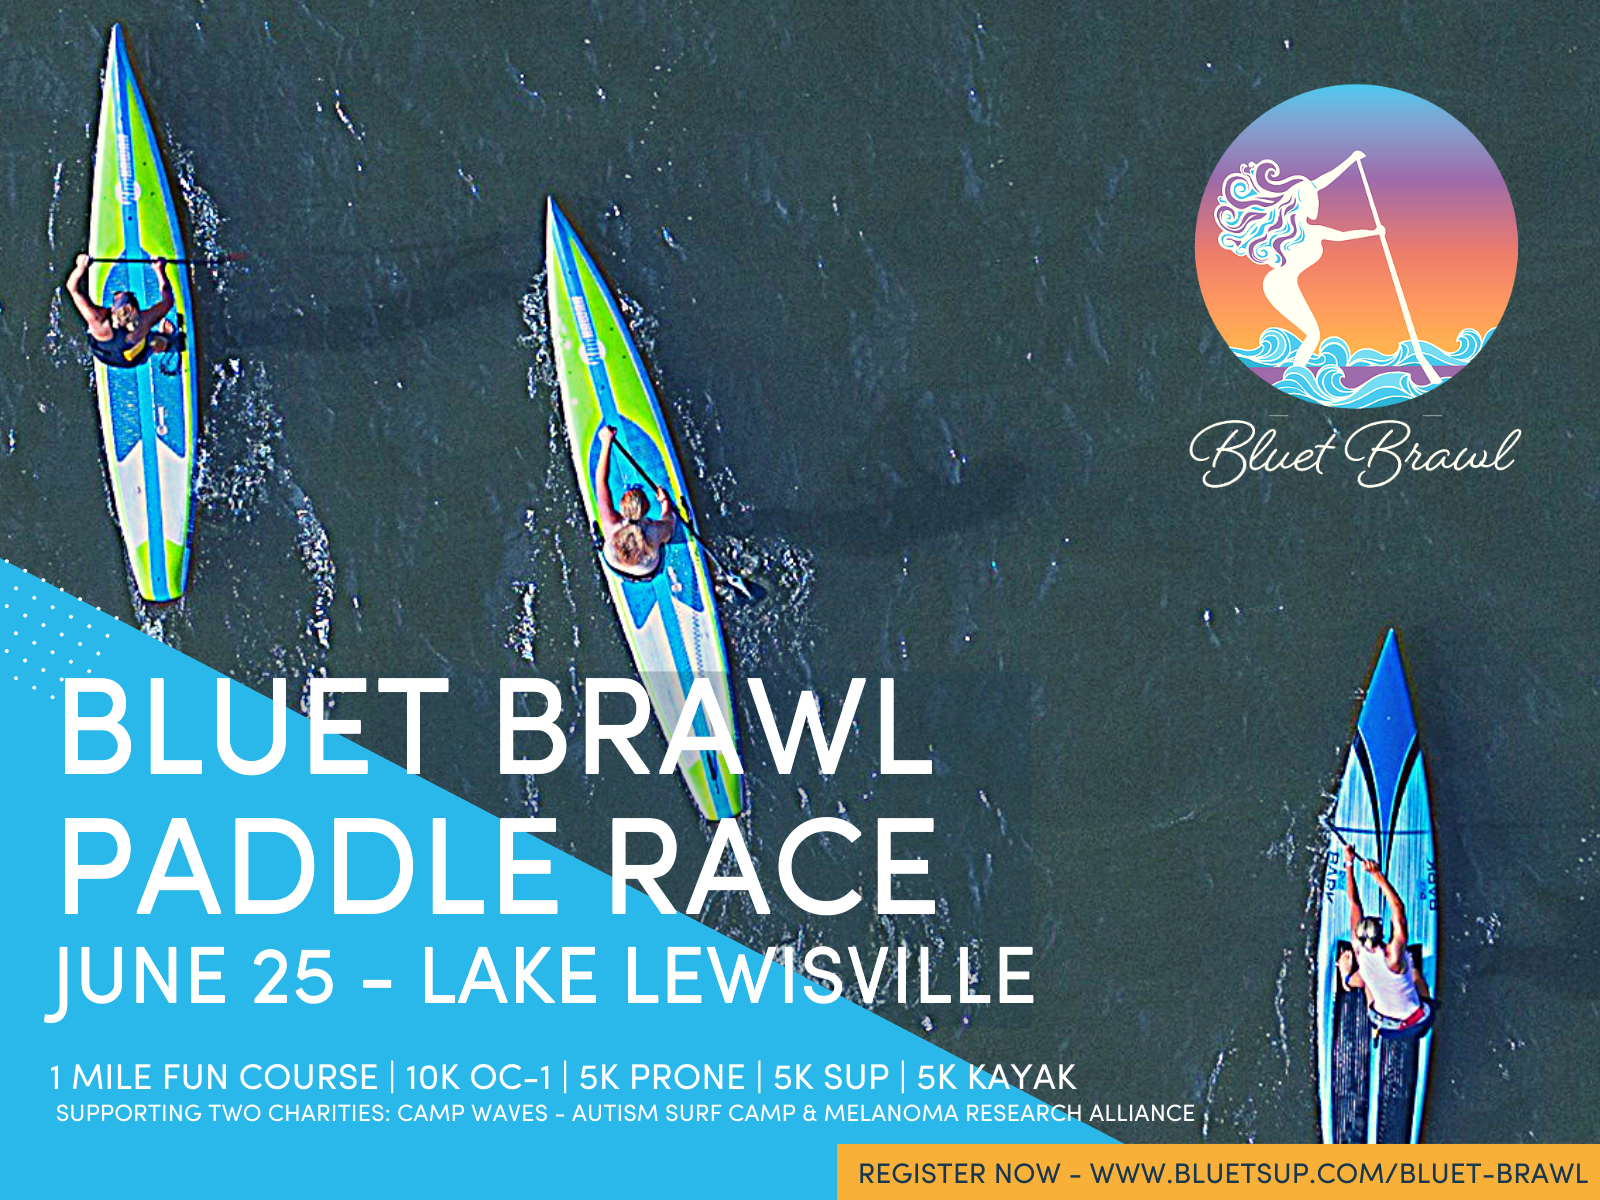 Bluet SUP To Host The Bluet Brawl 2022 Paddle Race at Pilot Knoll Park - Highland Village - Texas